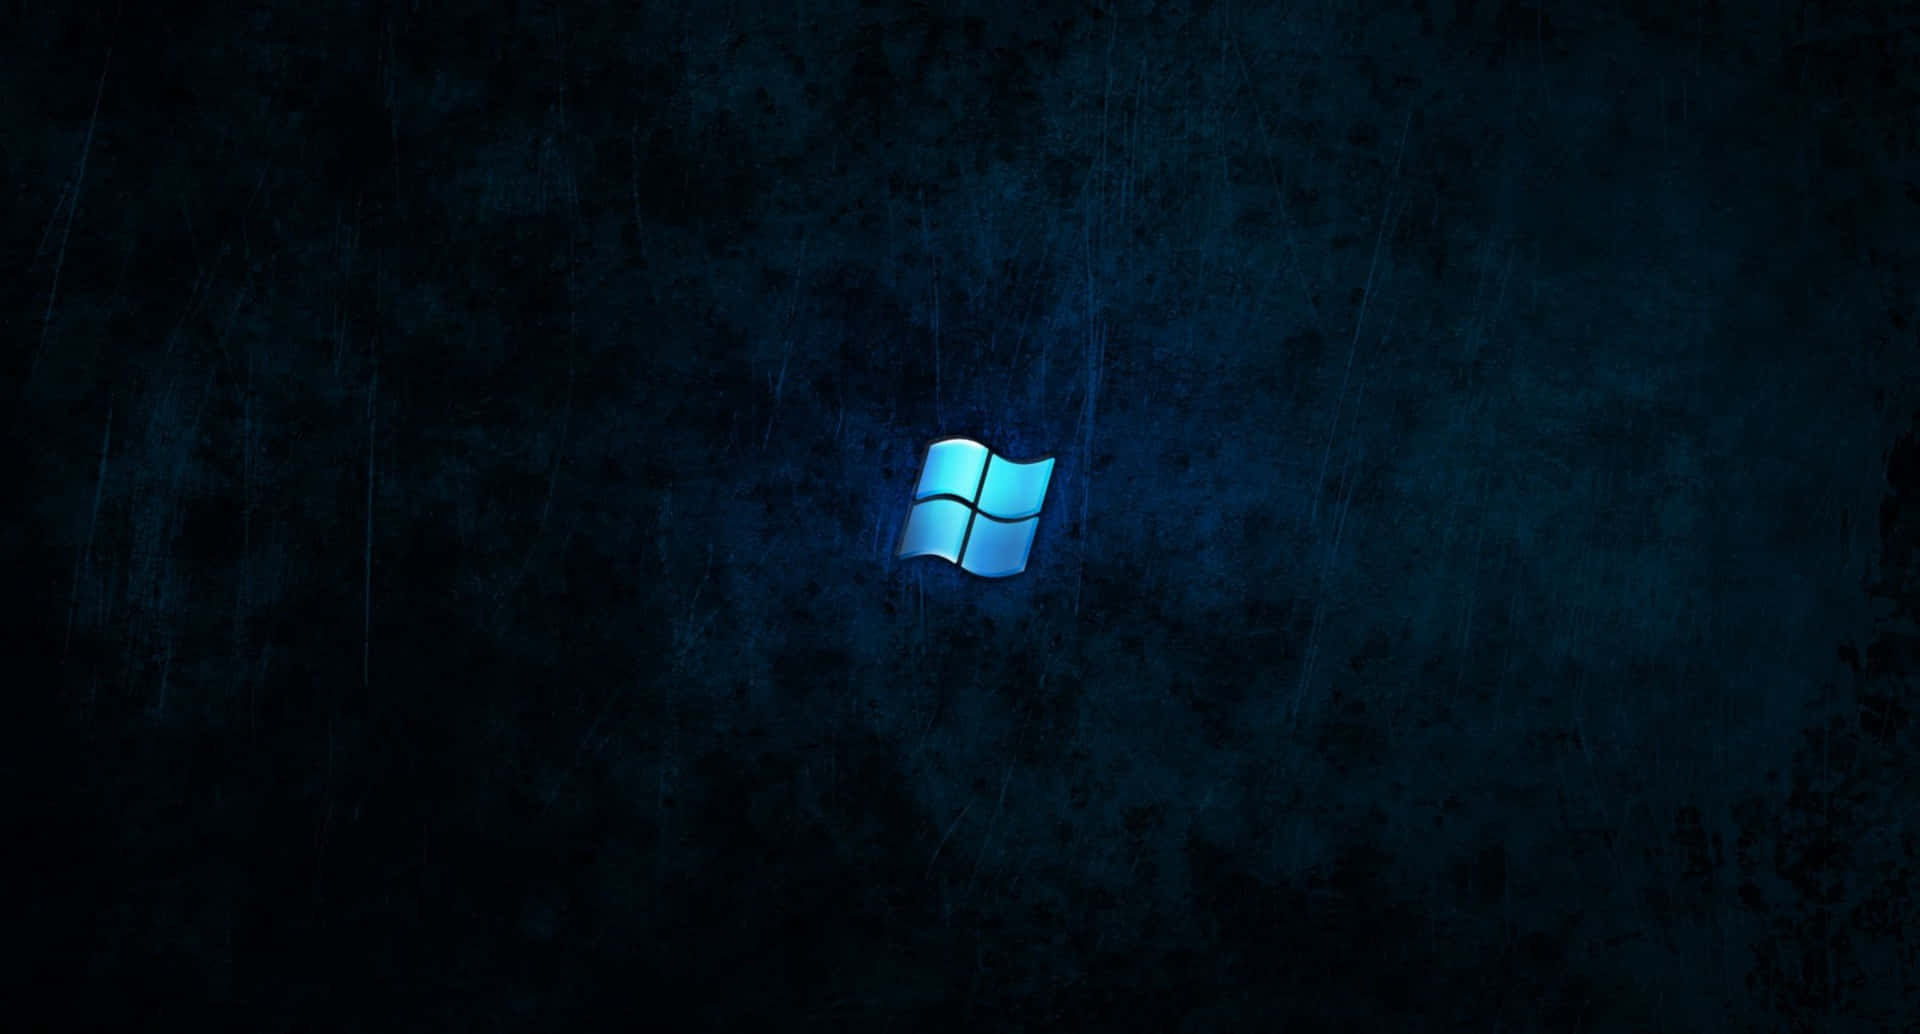 Fondosde Pantalla Hd Del Logo De Windows. Fondo de pantalla